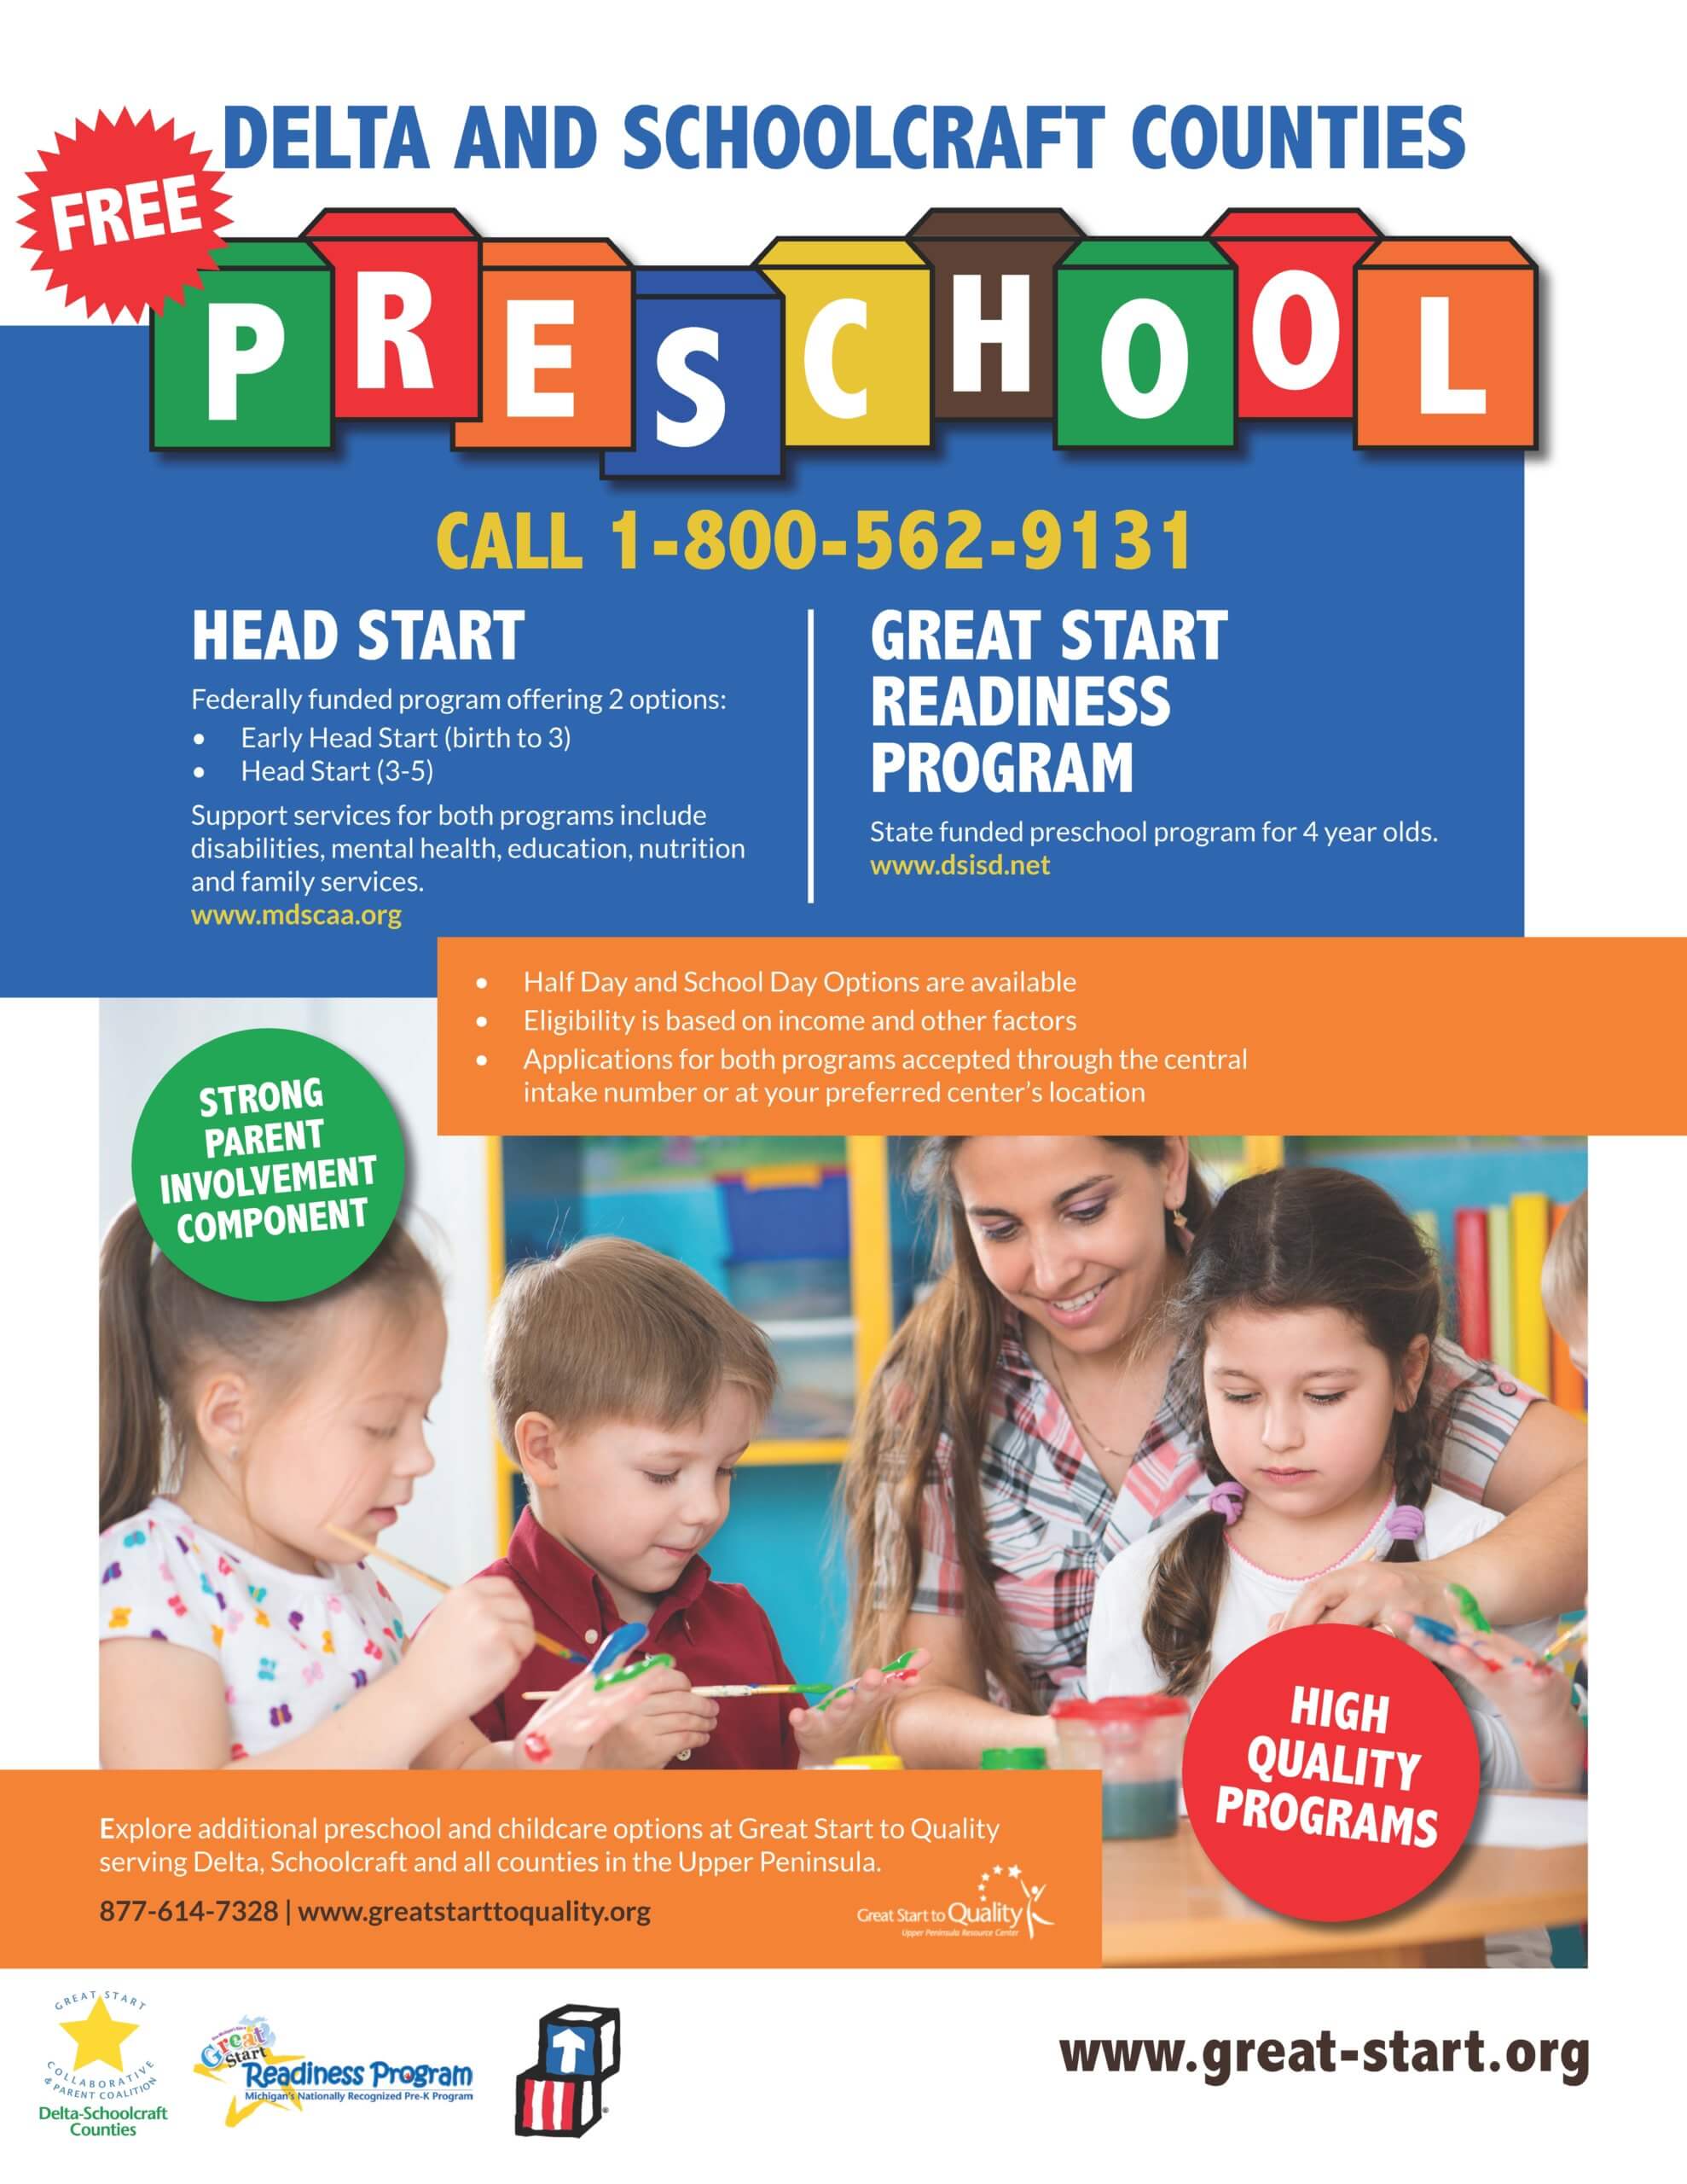 Delta Schoolcraft Free preschool info